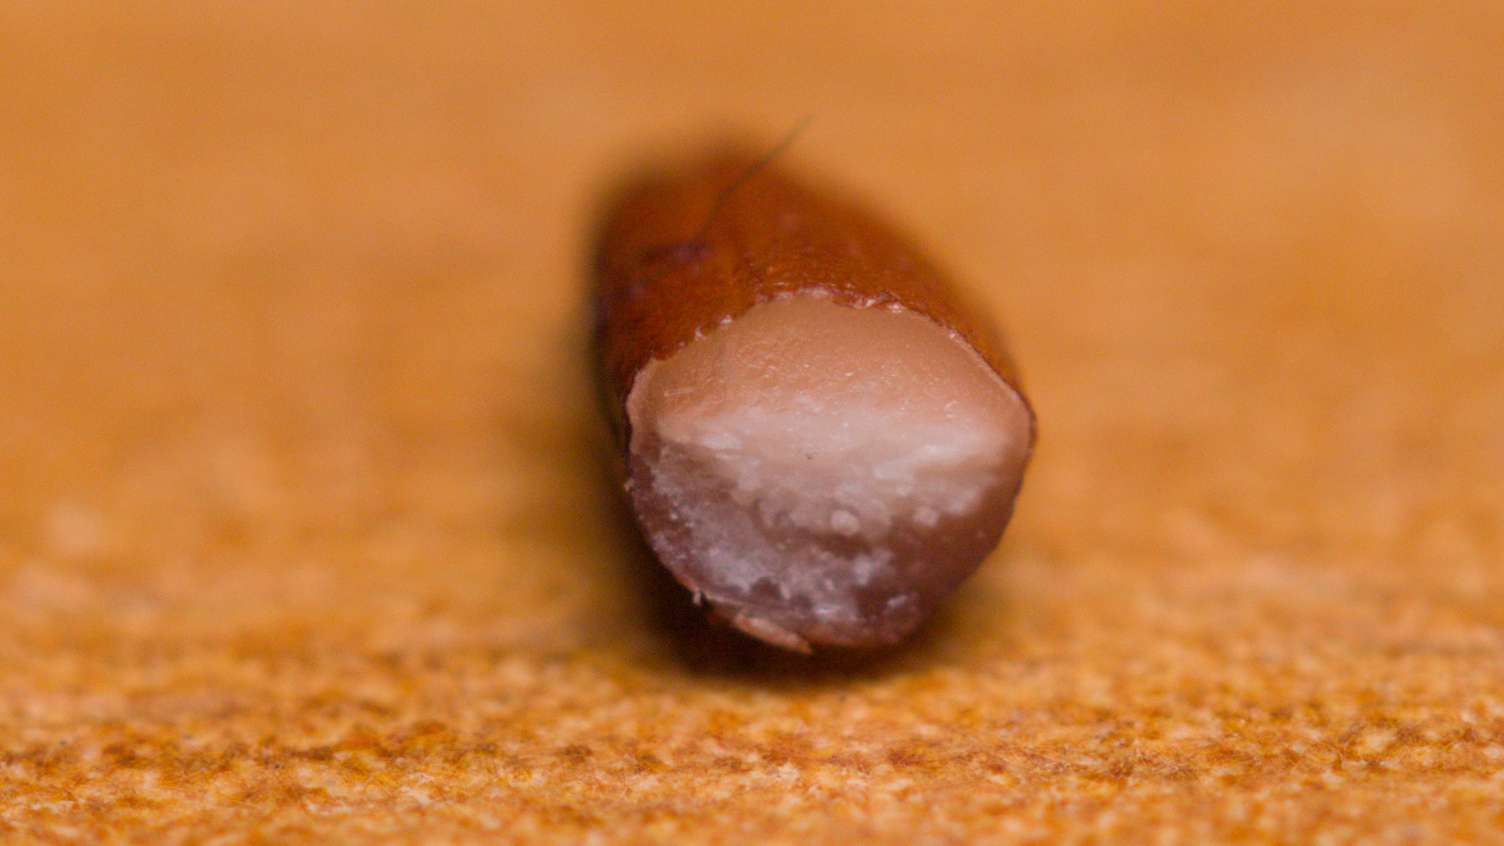 Macro photo of a single grain of brown jasmine rice cut in half to show